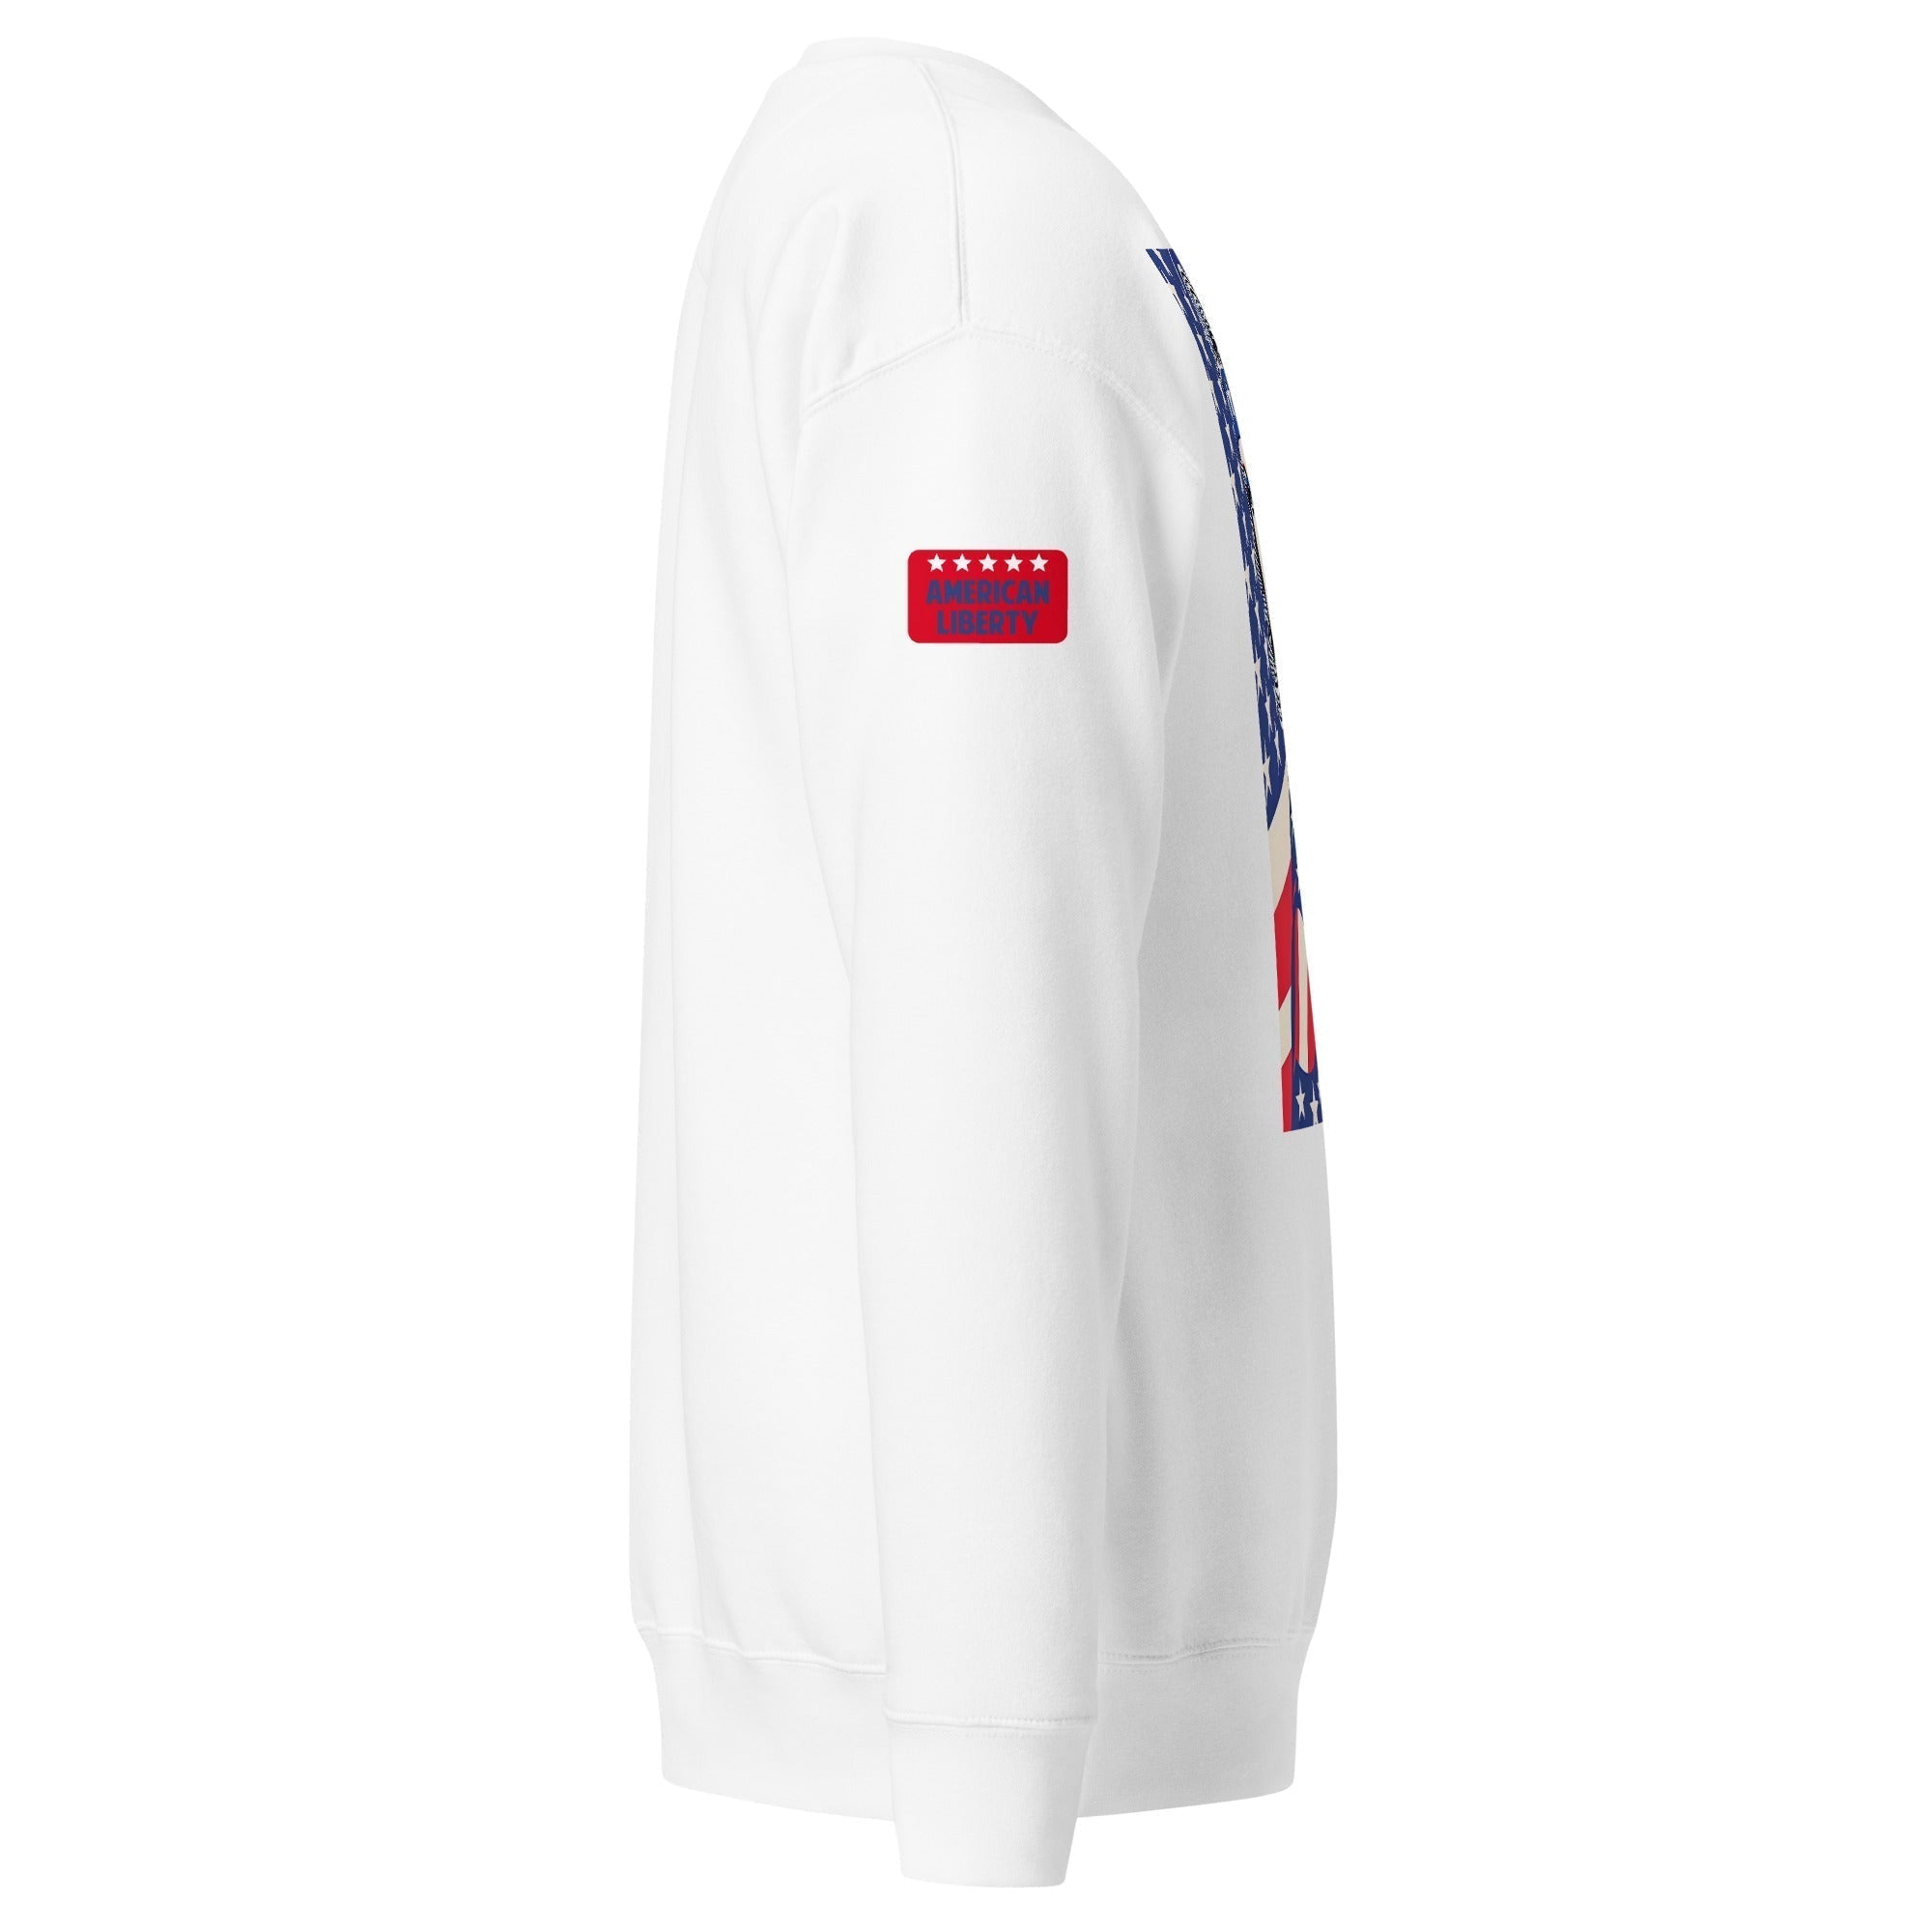 Unisex Premium Sweatshirt - American Liberty Series v.32 - GRAPHIC T-SHIRTS